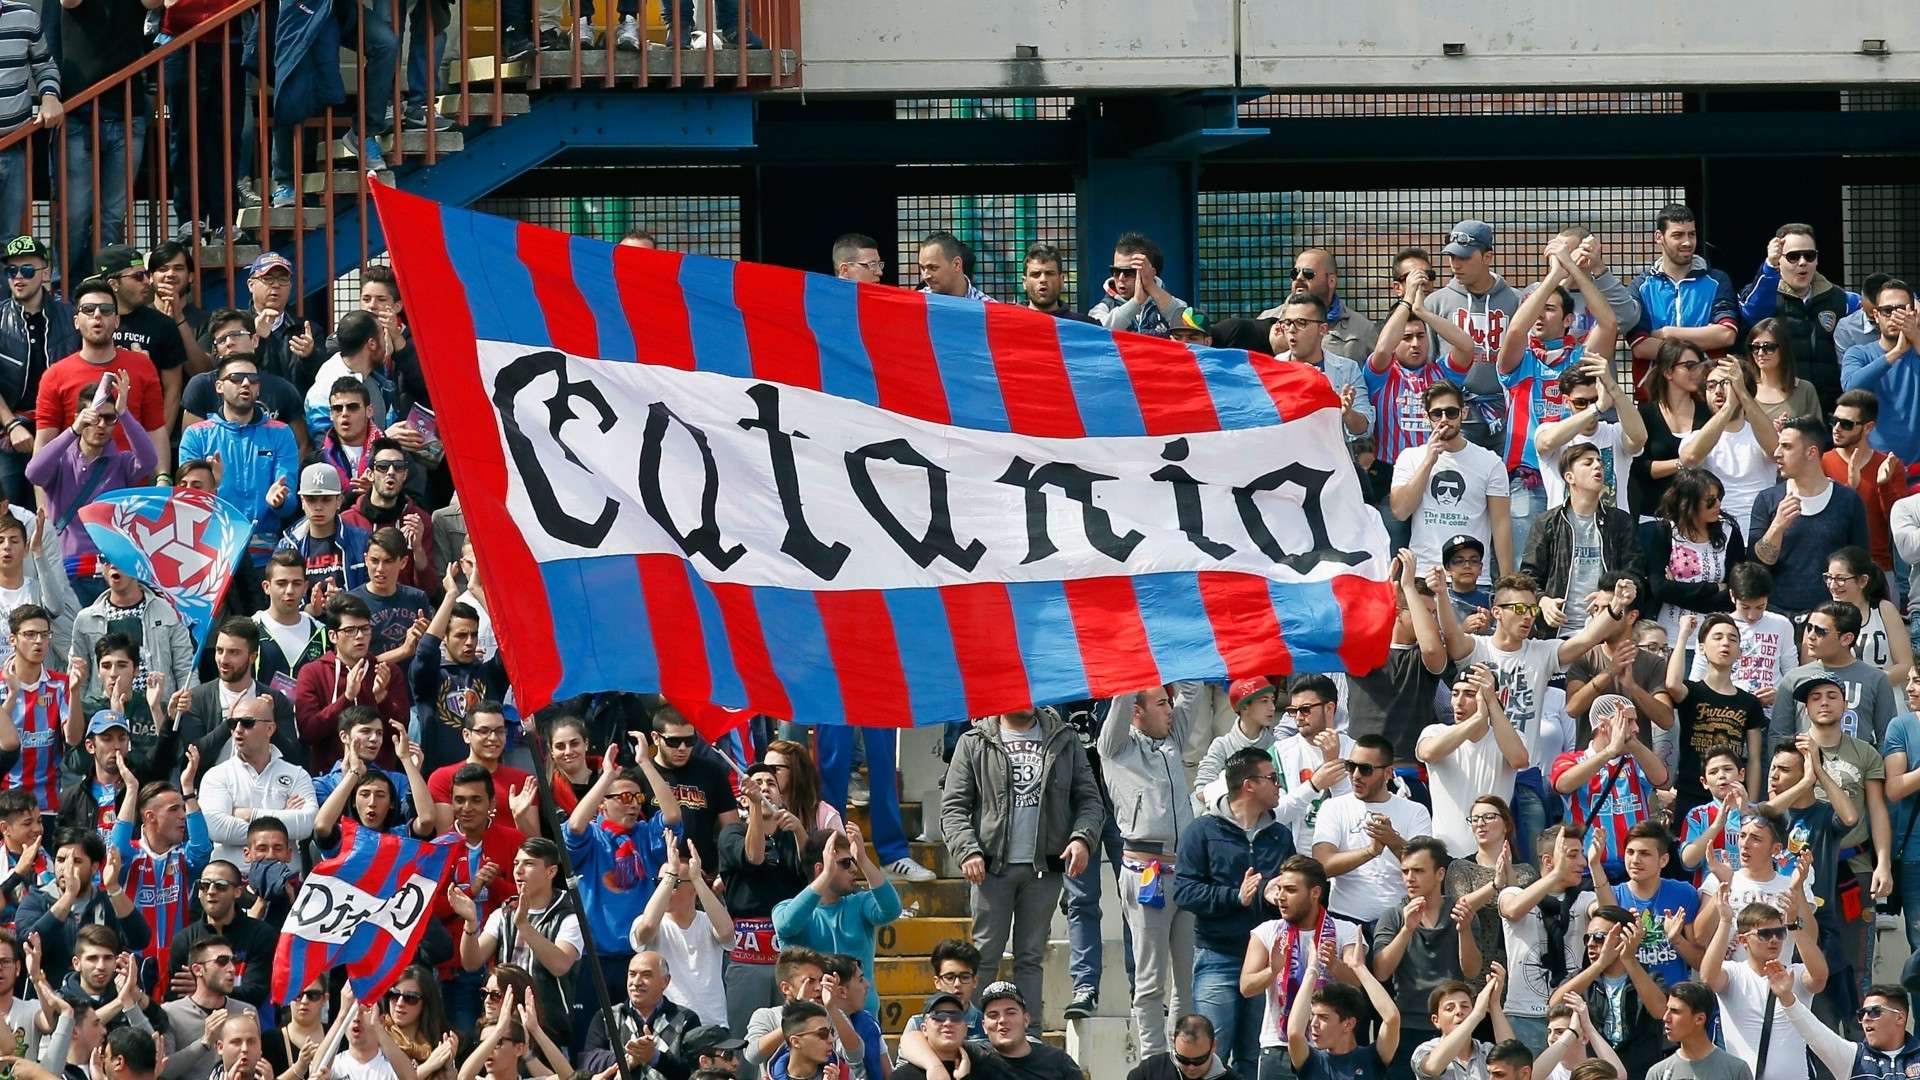 Catania fans